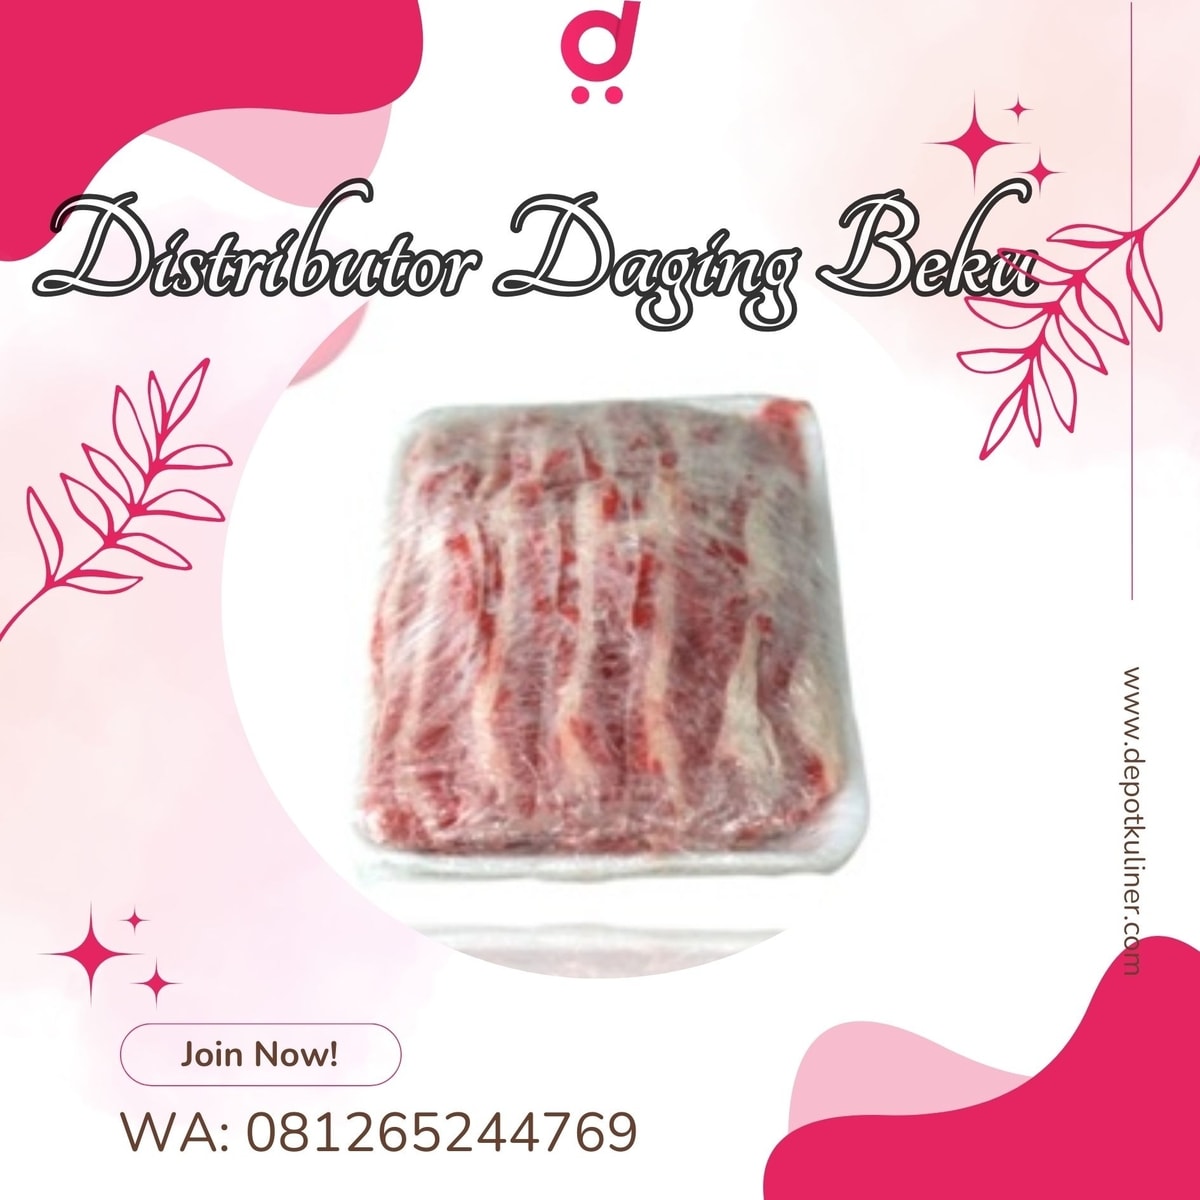 Distributor Daging Beku DISKON DISTRIBUTOR, 081265244769